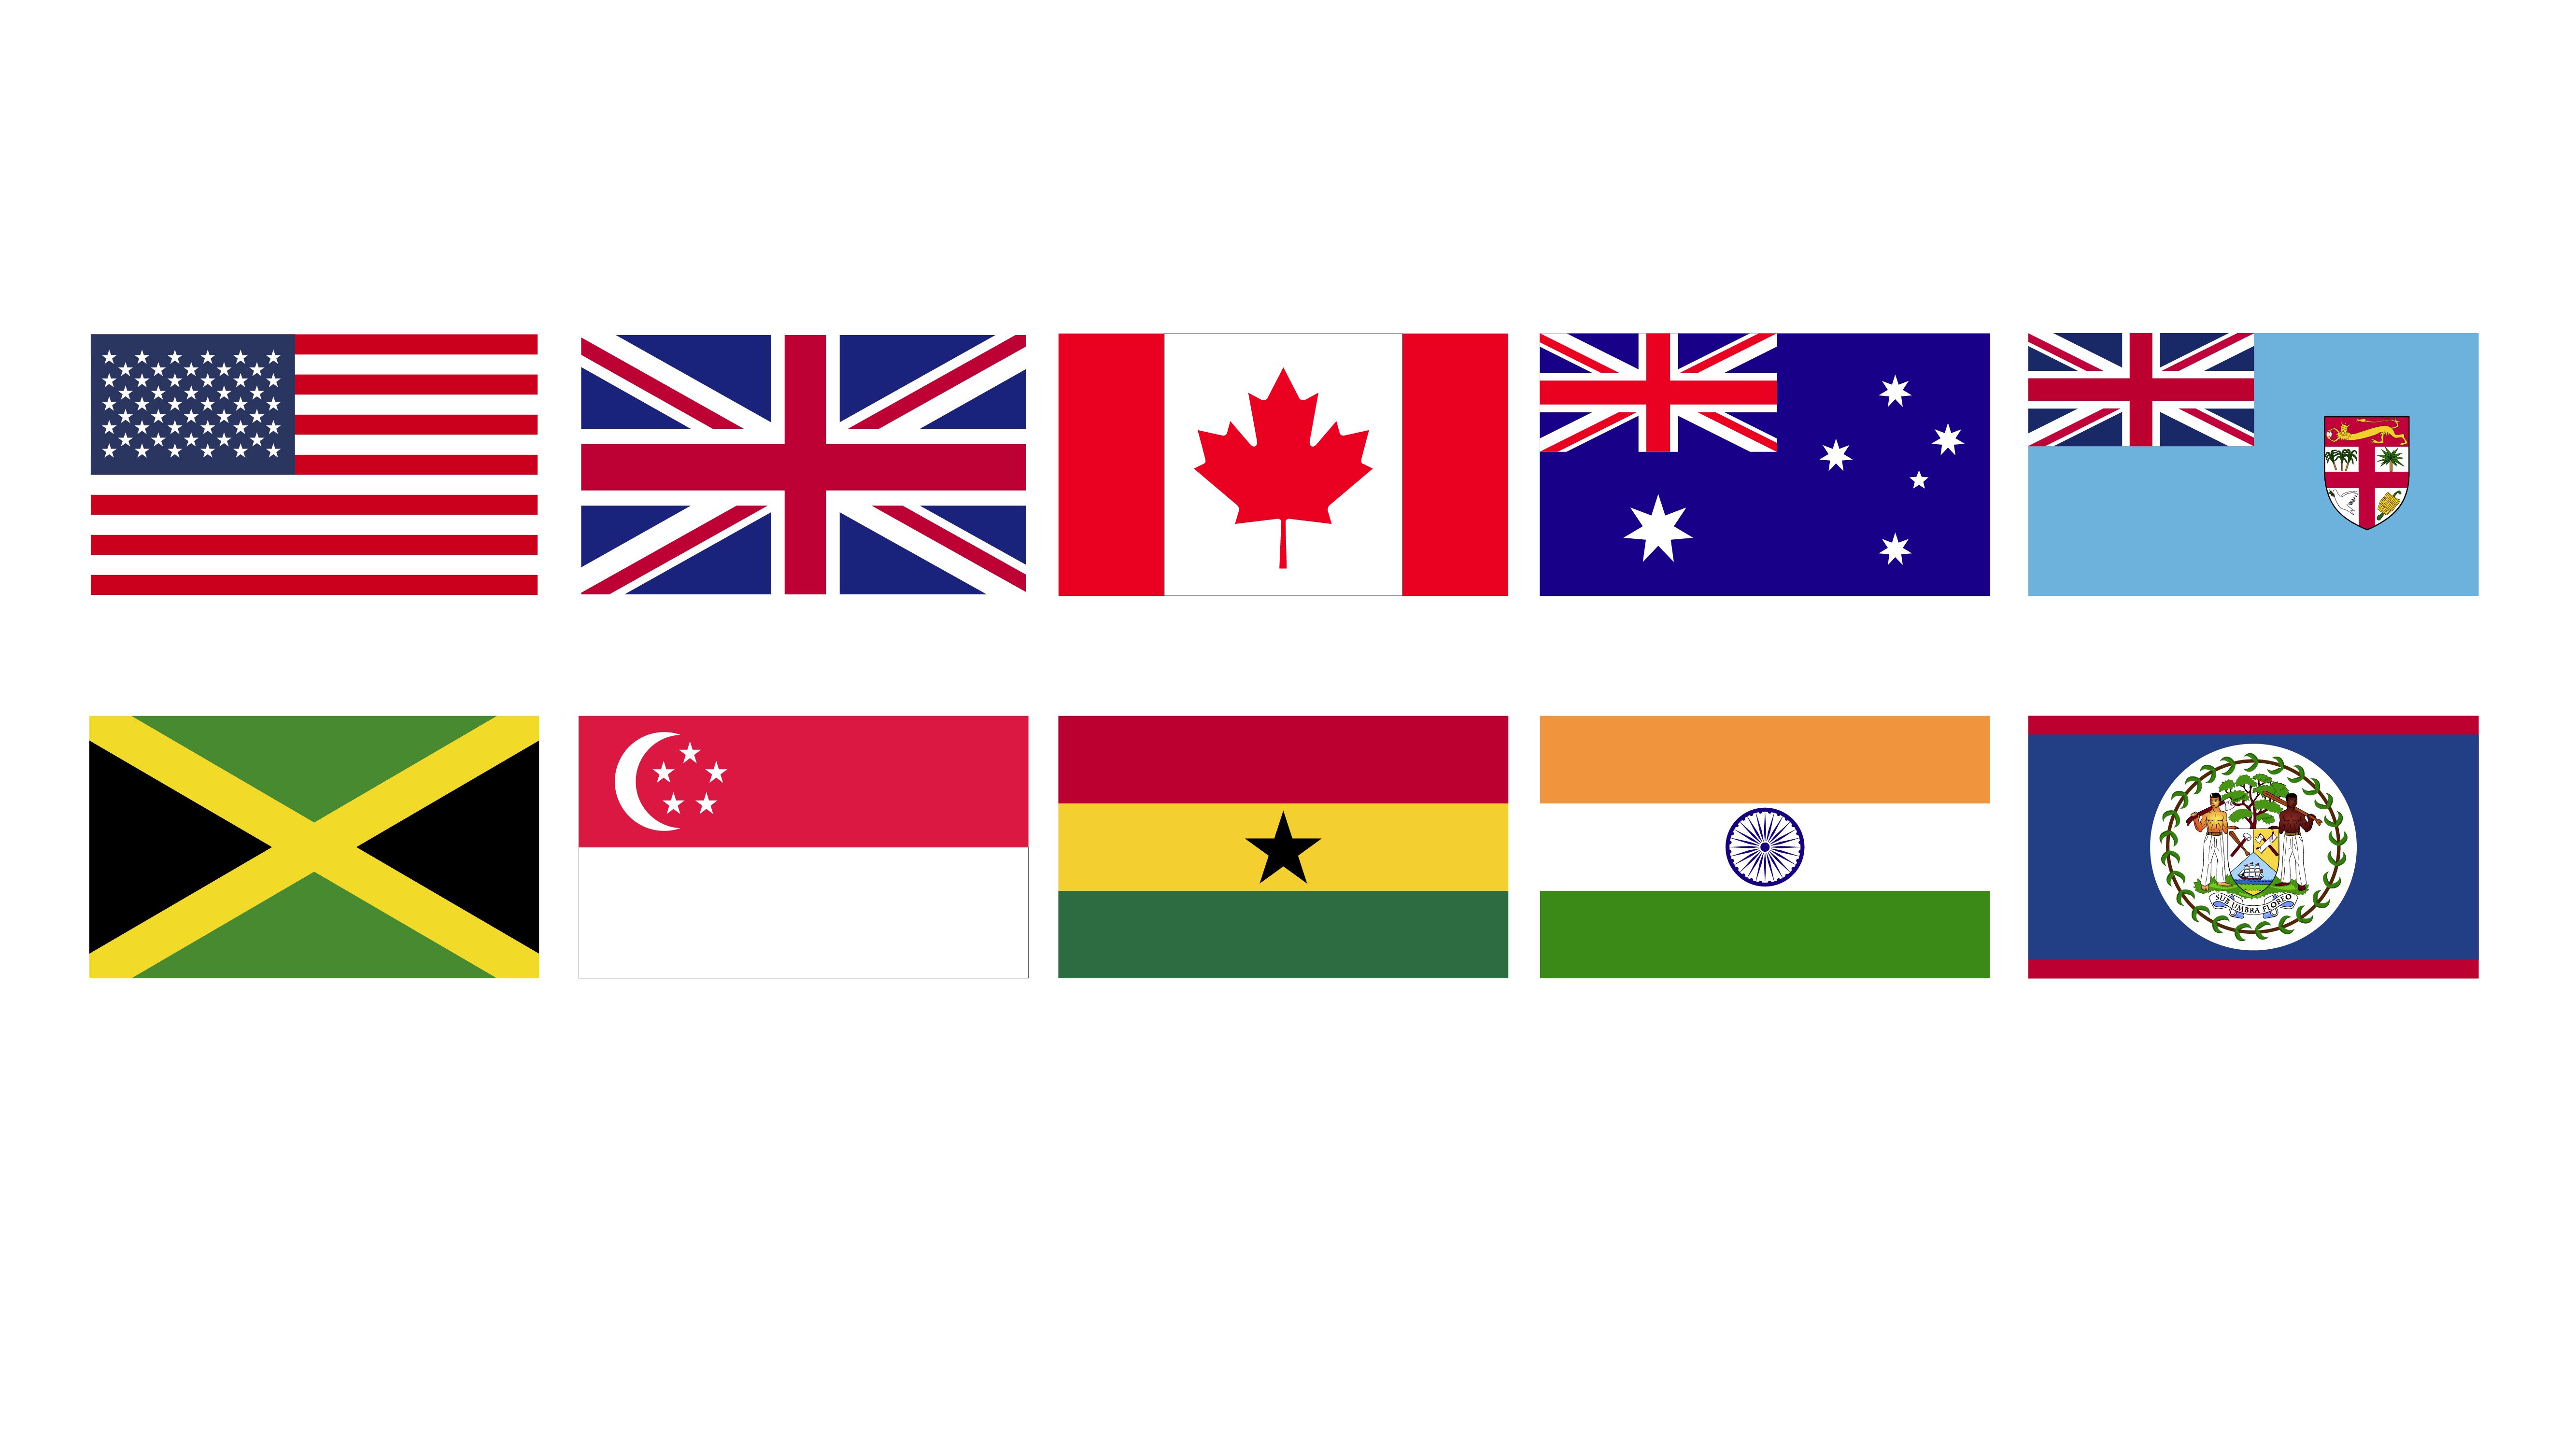  drawings of different flags: USA, UK, Belize, Canada, Fiji, Australia, Ghana, India, Jamaica, Singapore. 